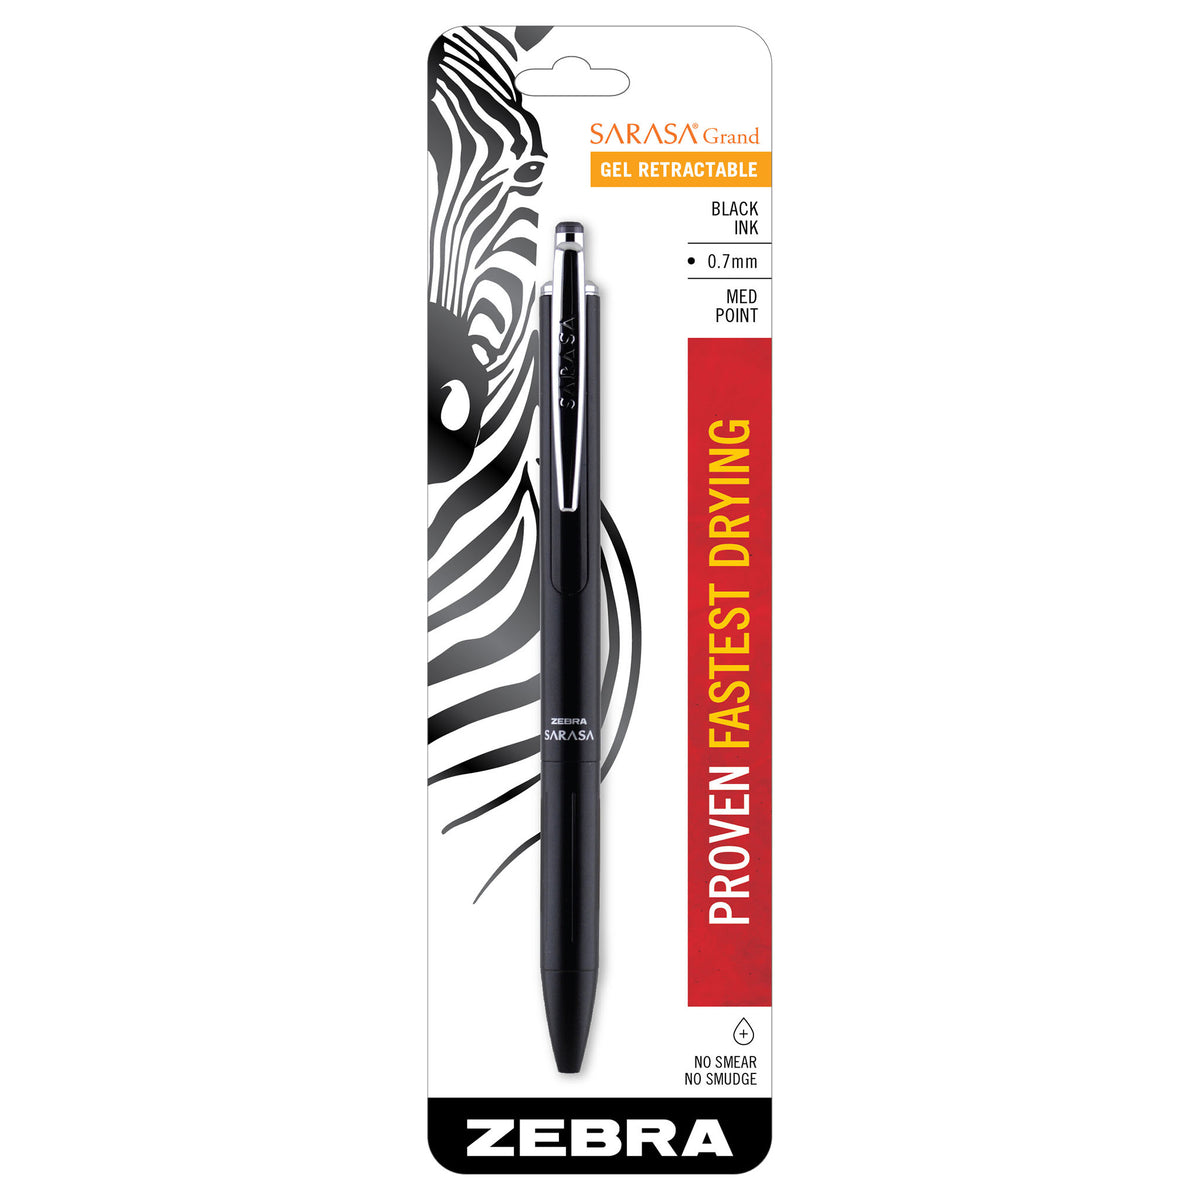 Zebra Pen Sarasa Grand Gel Retractable White 0.7mm 1pk W Bonus RFL